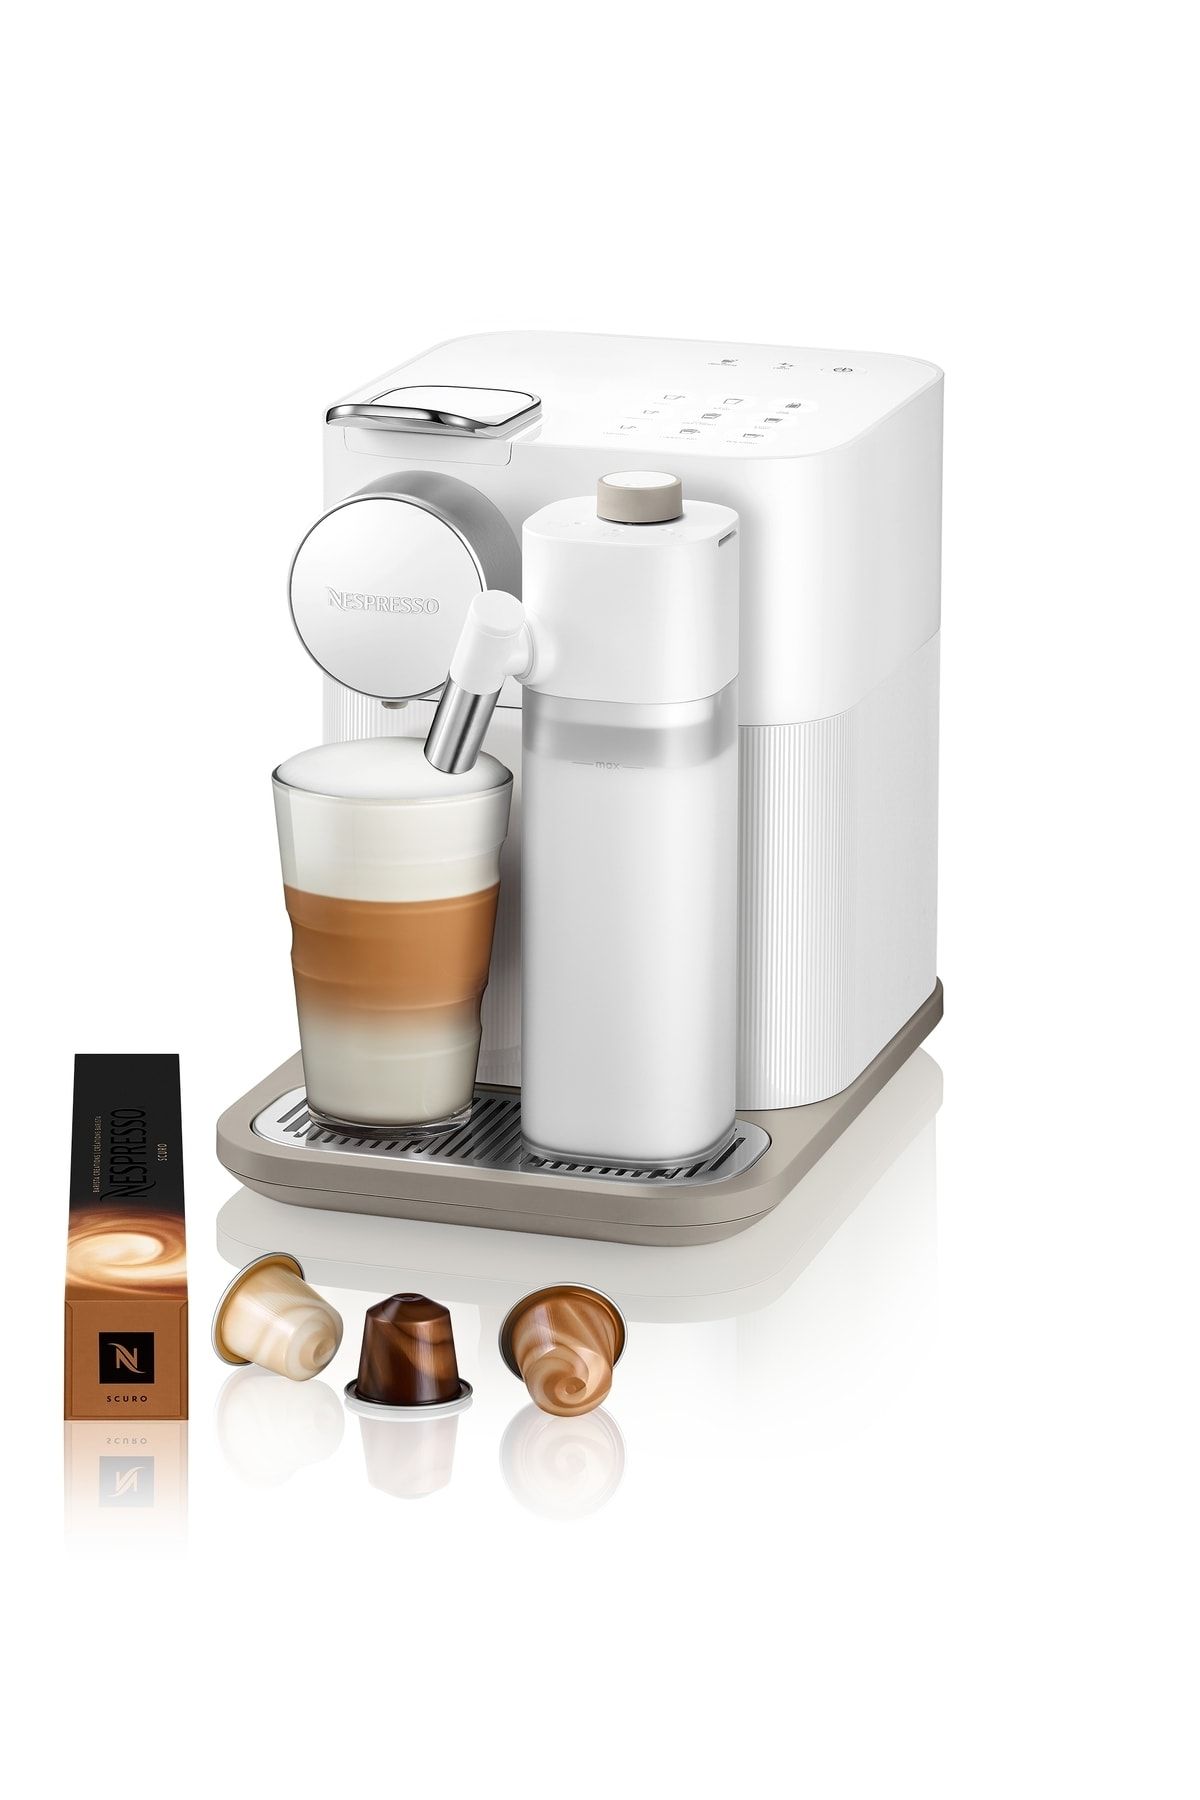 Nespresso F531 White Gran Lattissima Kapsüllü Kahve Makinesi (beyaz) 500.01.01.7381